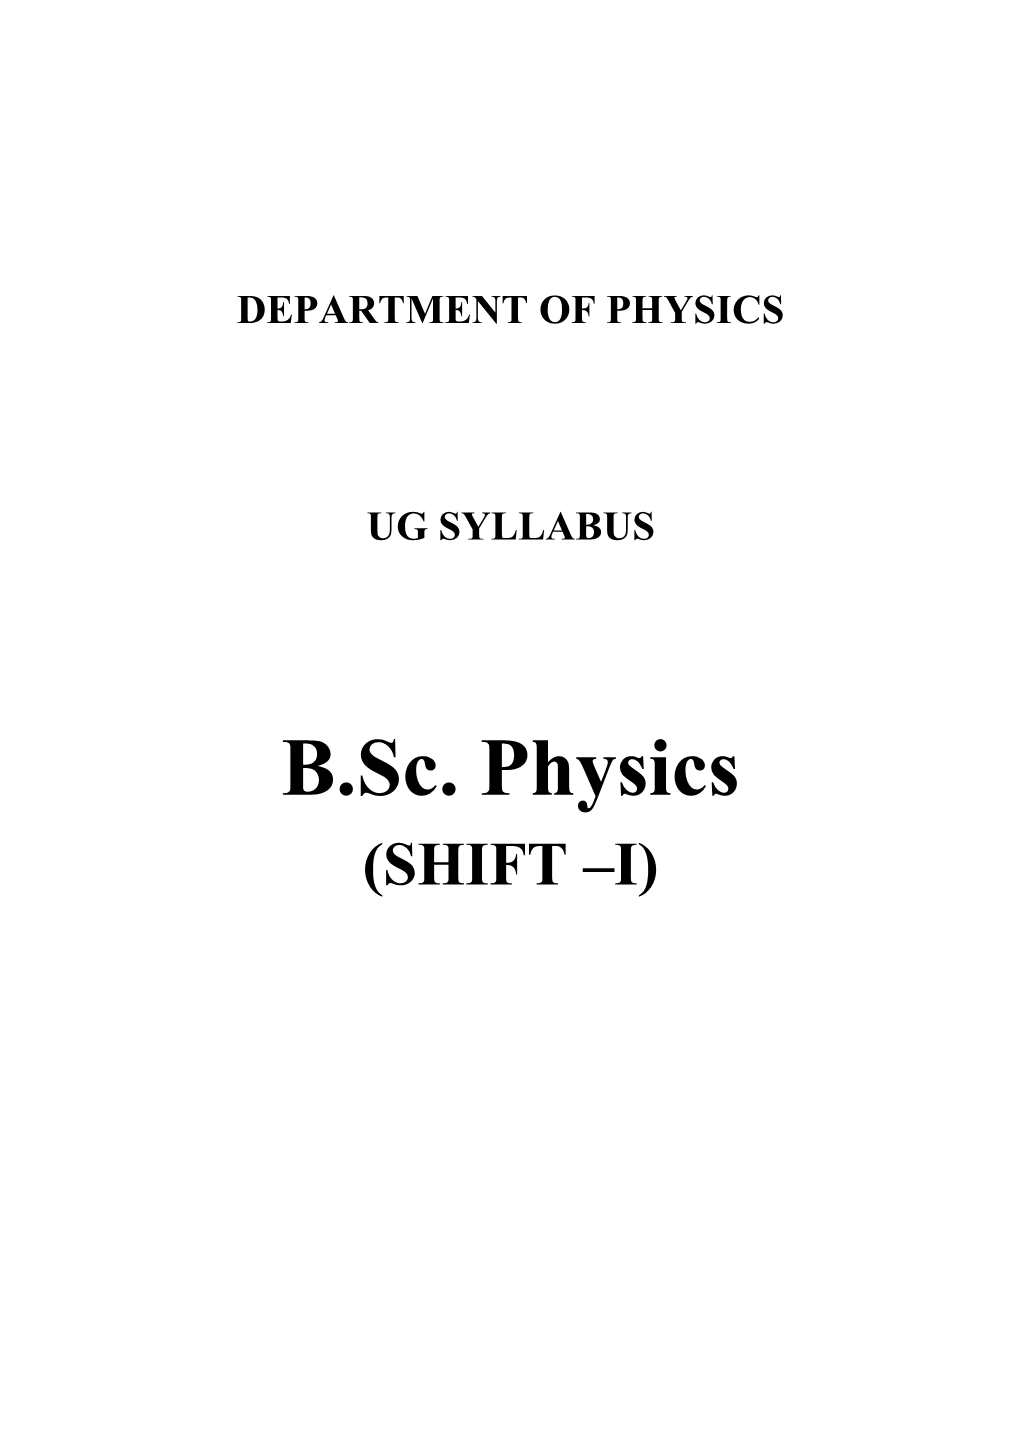 B.Sc. Physics